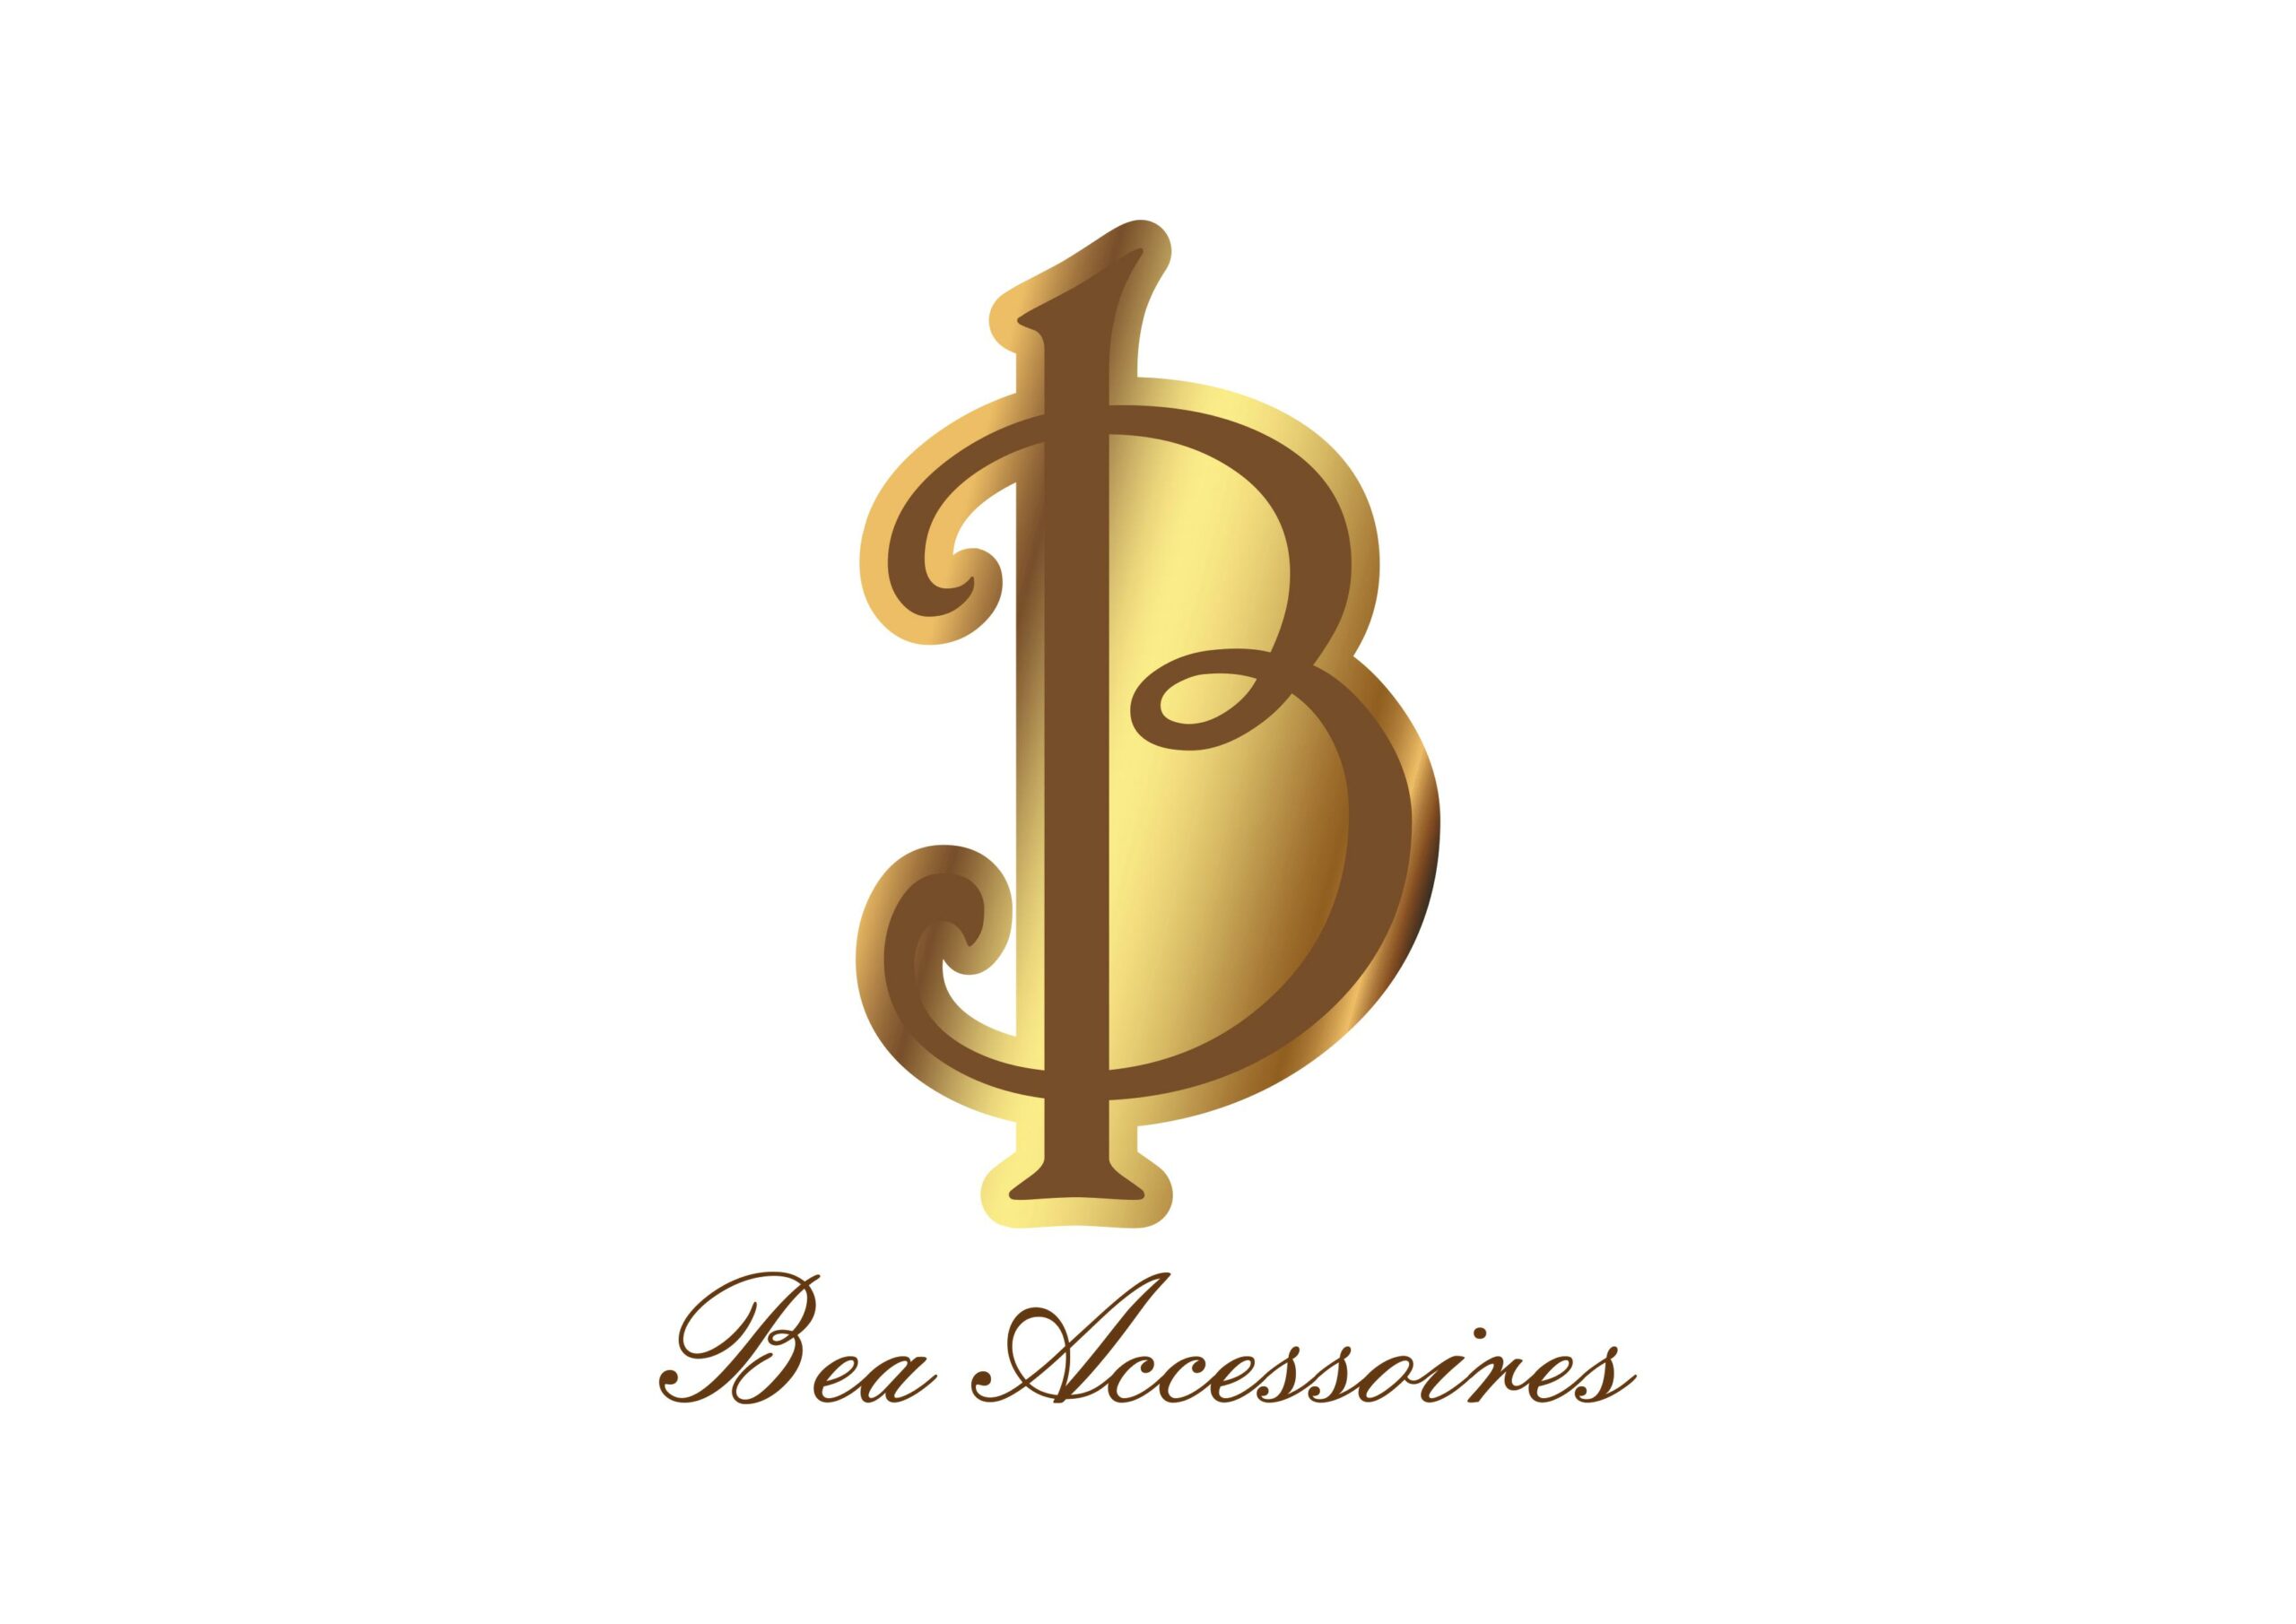 bea-accessoires-logo